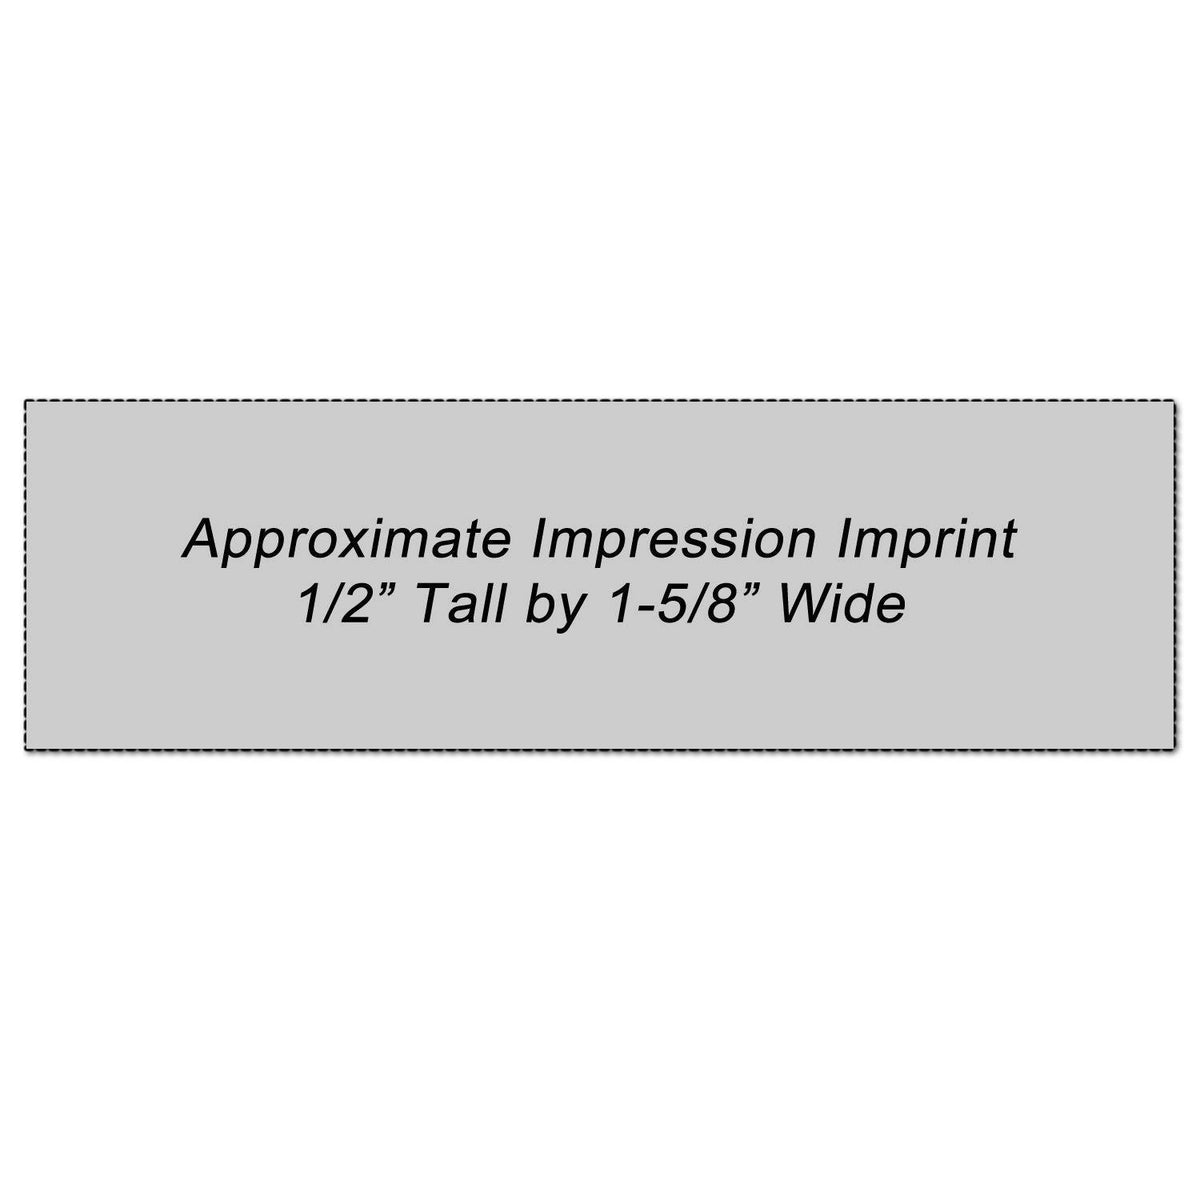 Official Use Only Xstamper Stamp Impression Size